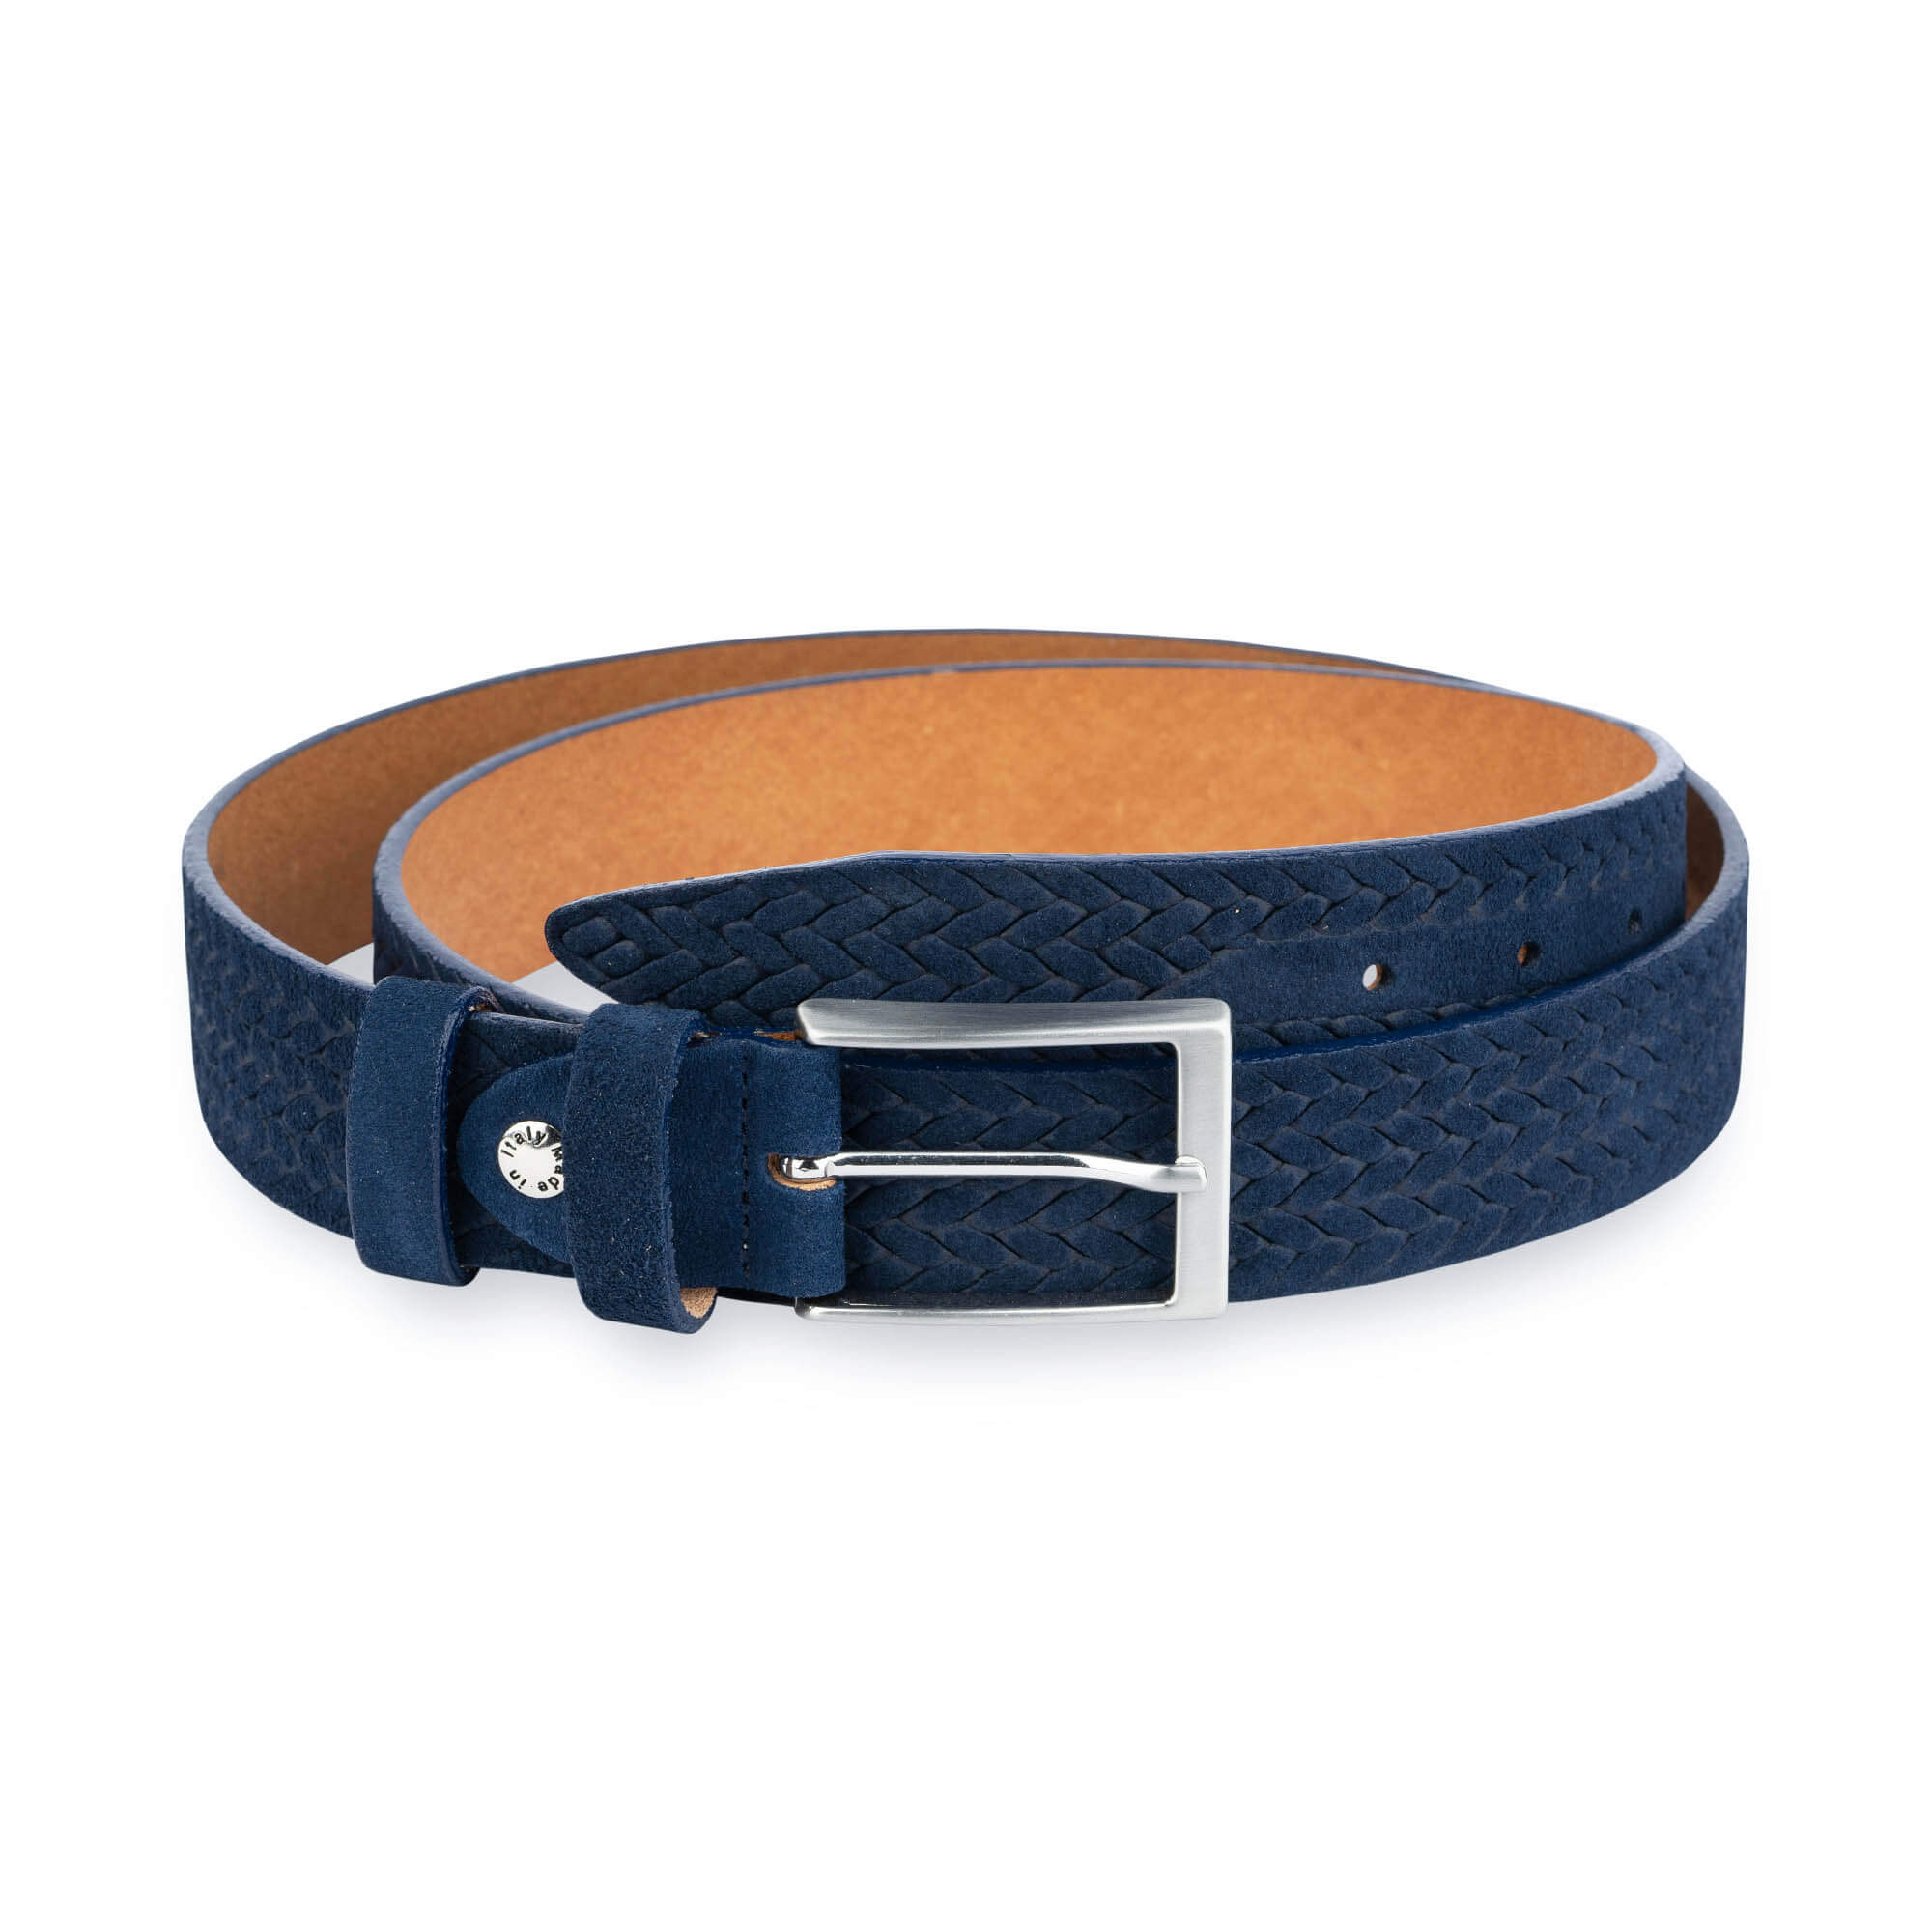 https://leatherbeltsonline.com/wp-content/uploads/2019/07/embossed-woven-mens-belt-blue-suede-35-mm-1.jpg